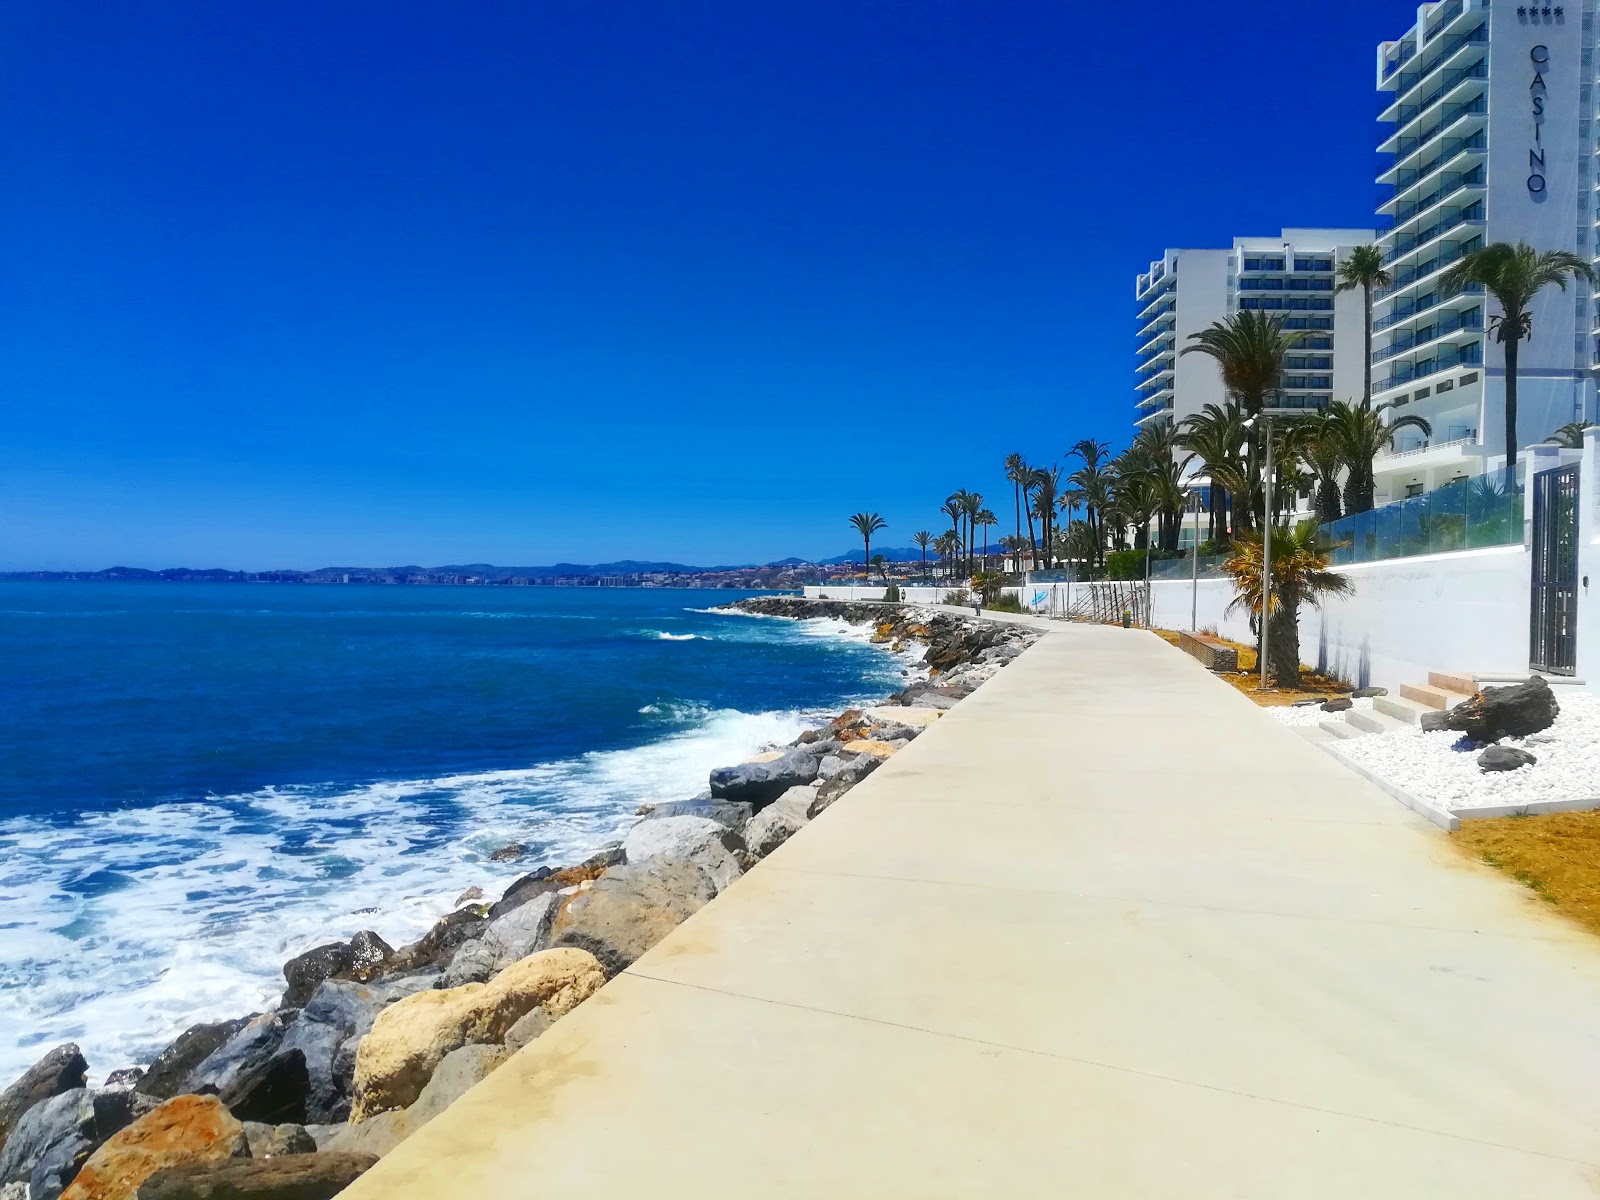 Foto van Playa Torrevigia met direct strand